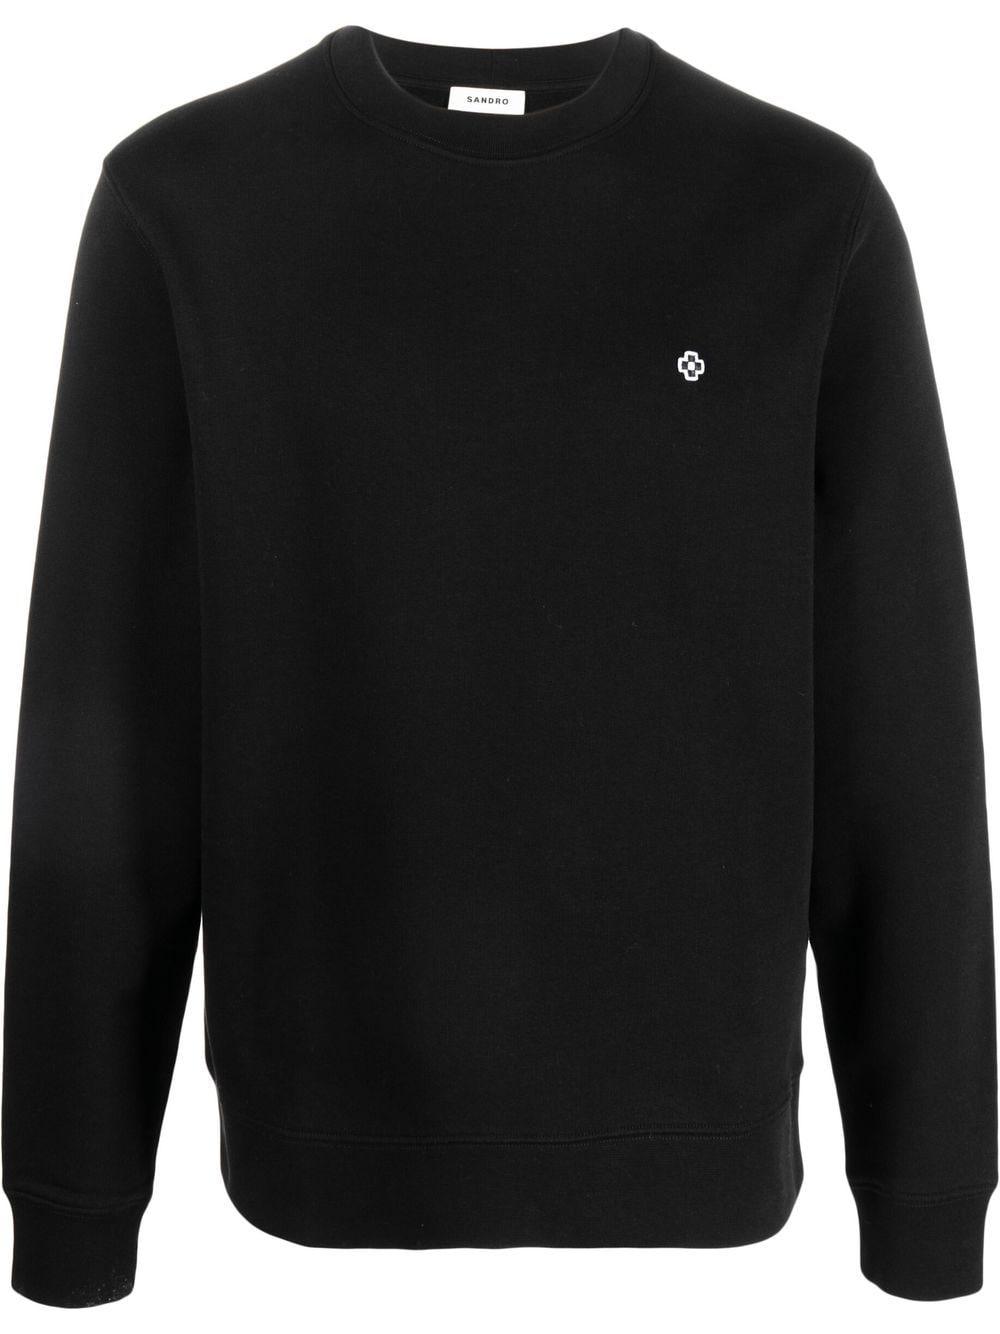 Sandro Embroidered Cross Crew-neck Sweatshirt in Black for Men | Lyst